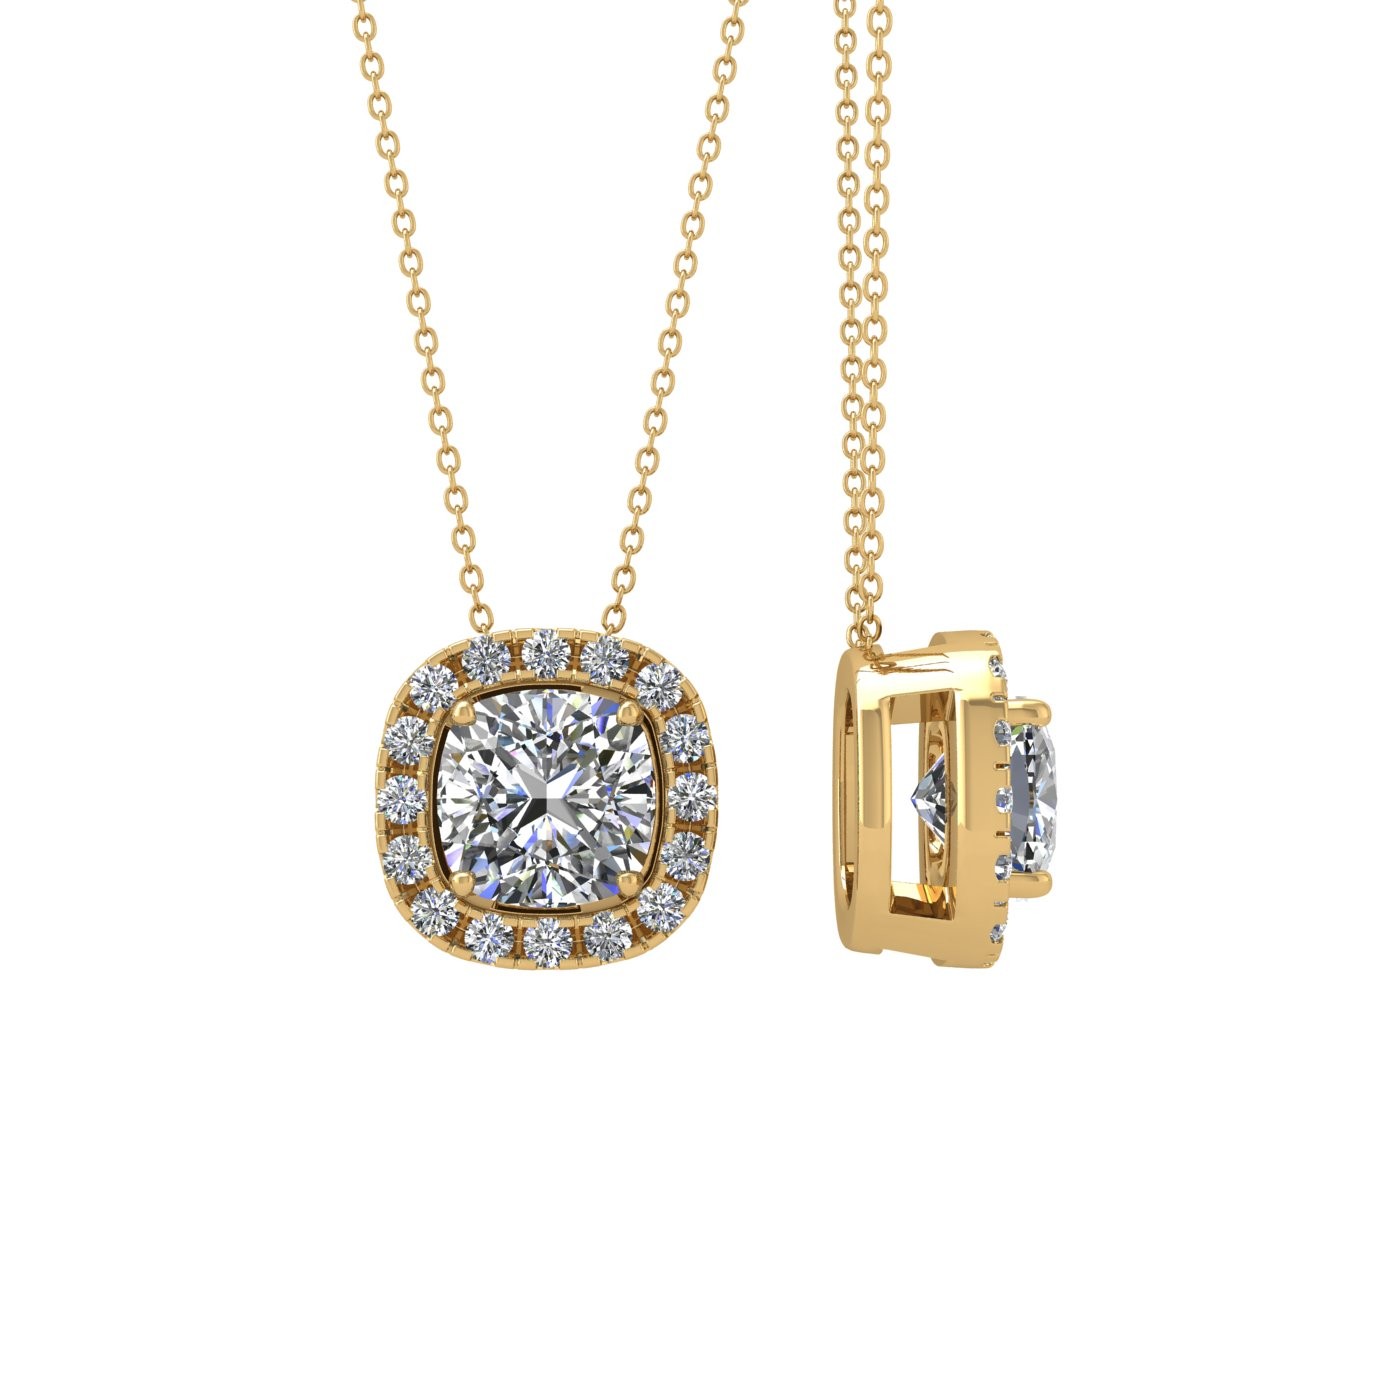 18k yellow gold  1,5 ct 4 prongs cushion shape diamond pendant with diamond pavÉ set halo Photos & images